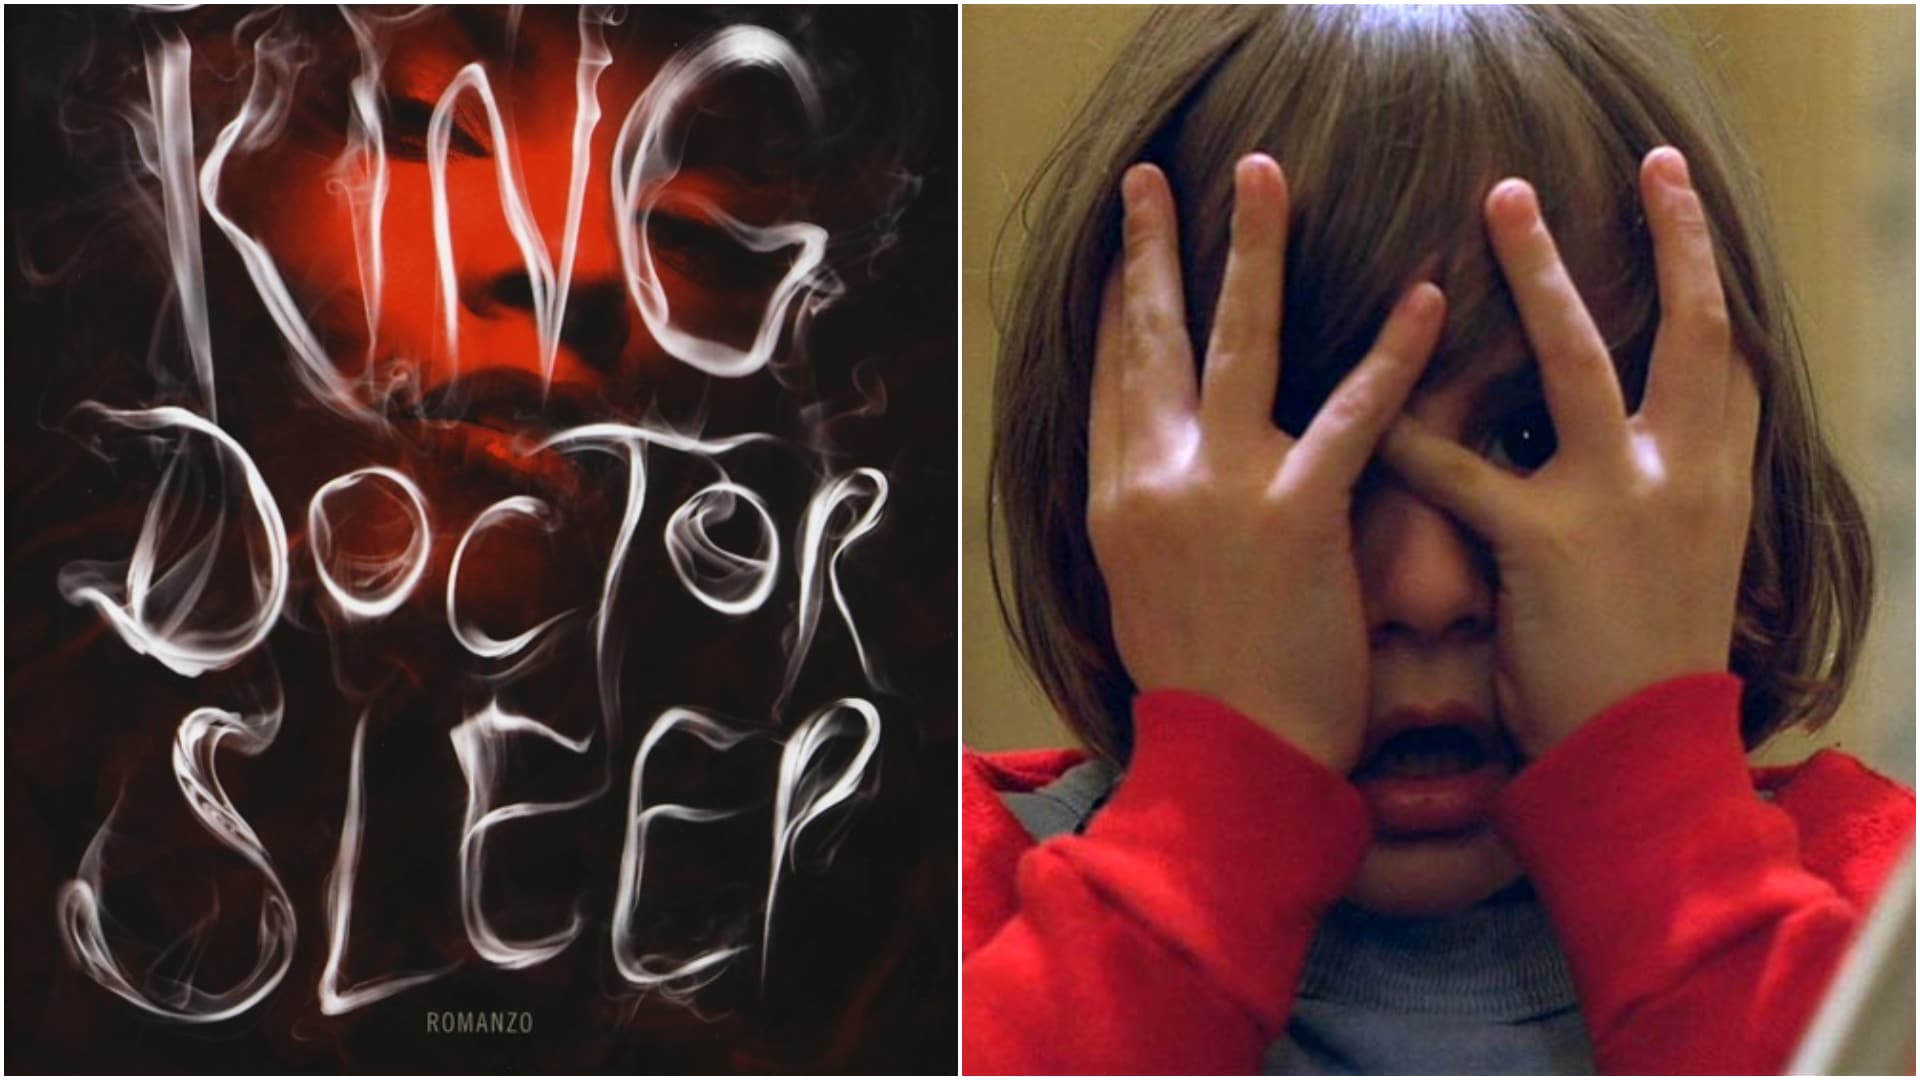 Doctor Sleep: in arrivo il sequel di Shining diretto da Mike Flanagan